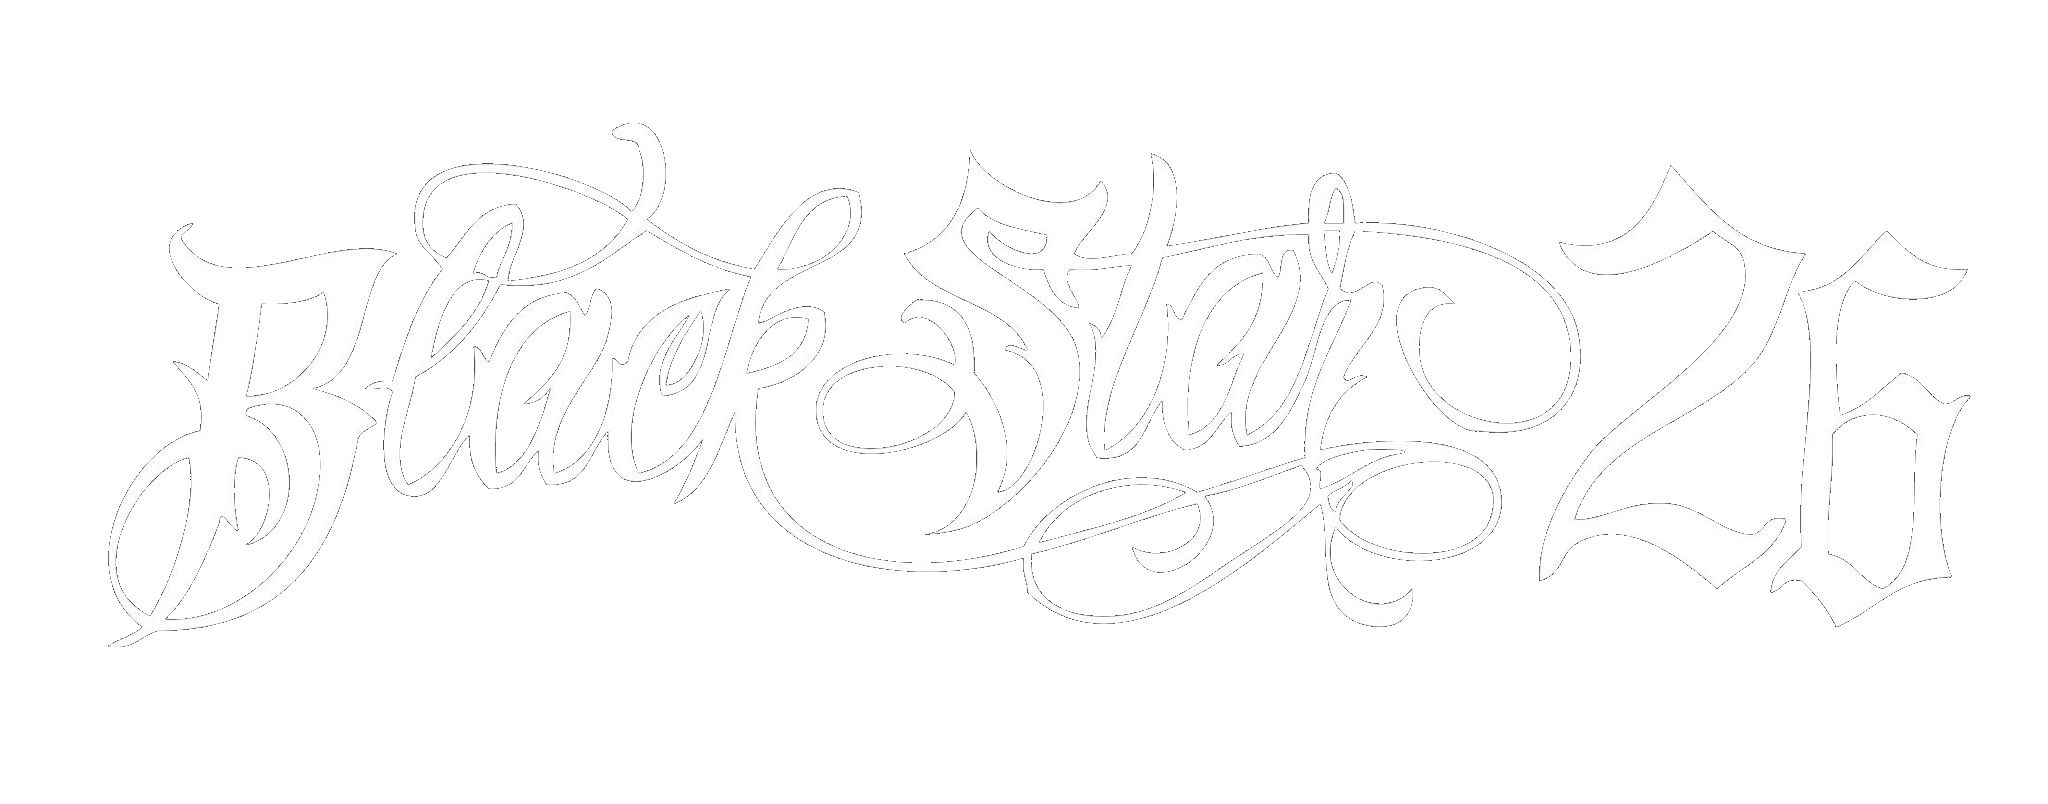 Blackstar26